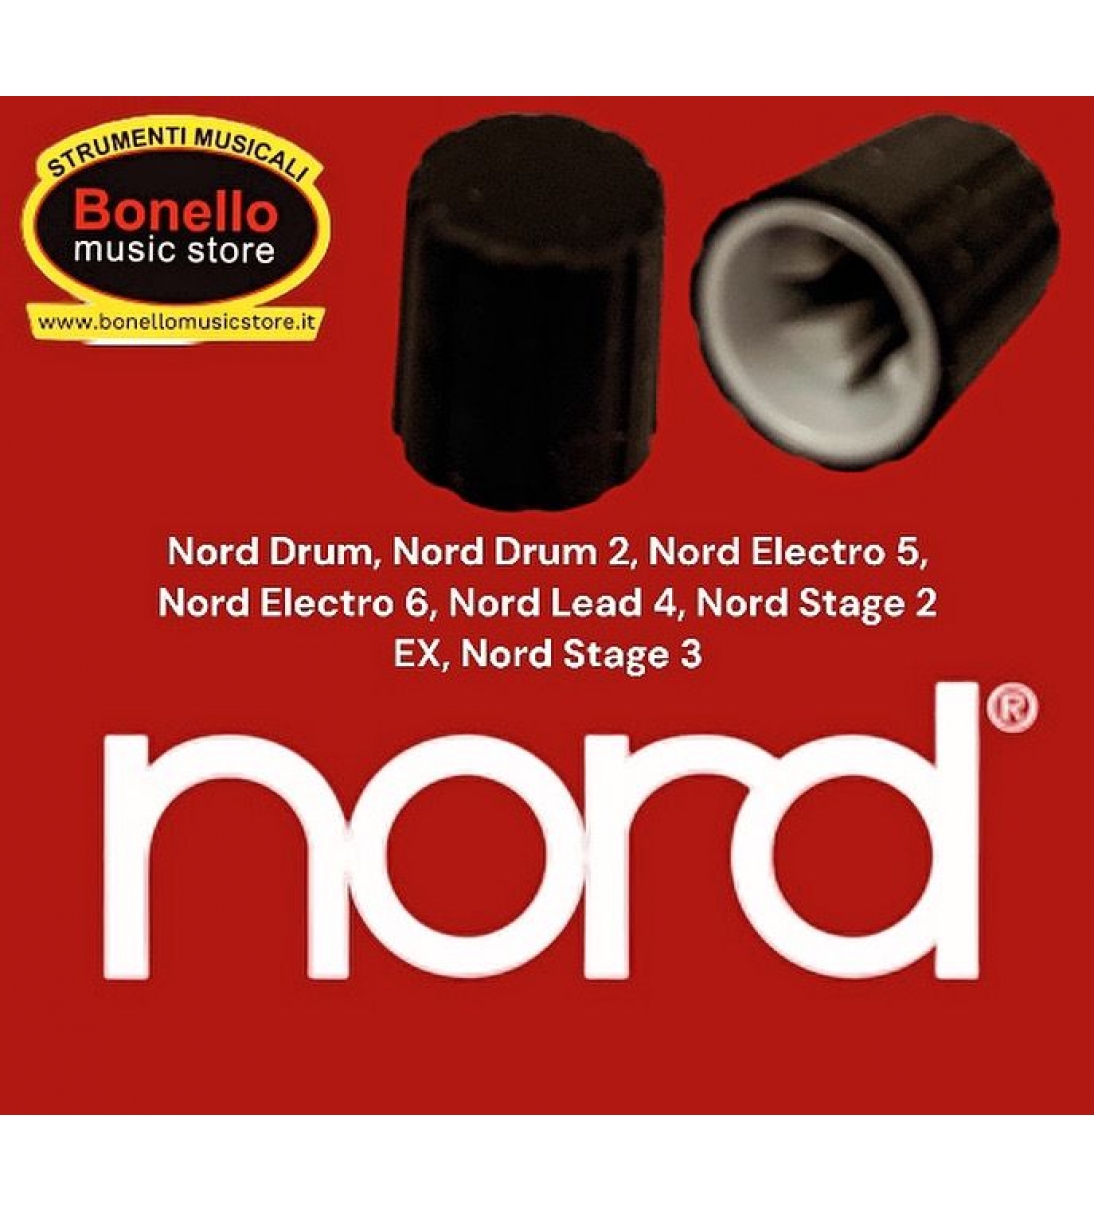 Knob encoder per Nord Drum, Nord Drum 2, Nord Electro 5, Nord Electro 6, Nord Lead 4, Nord Stage 2 EX, Nord Stage 3